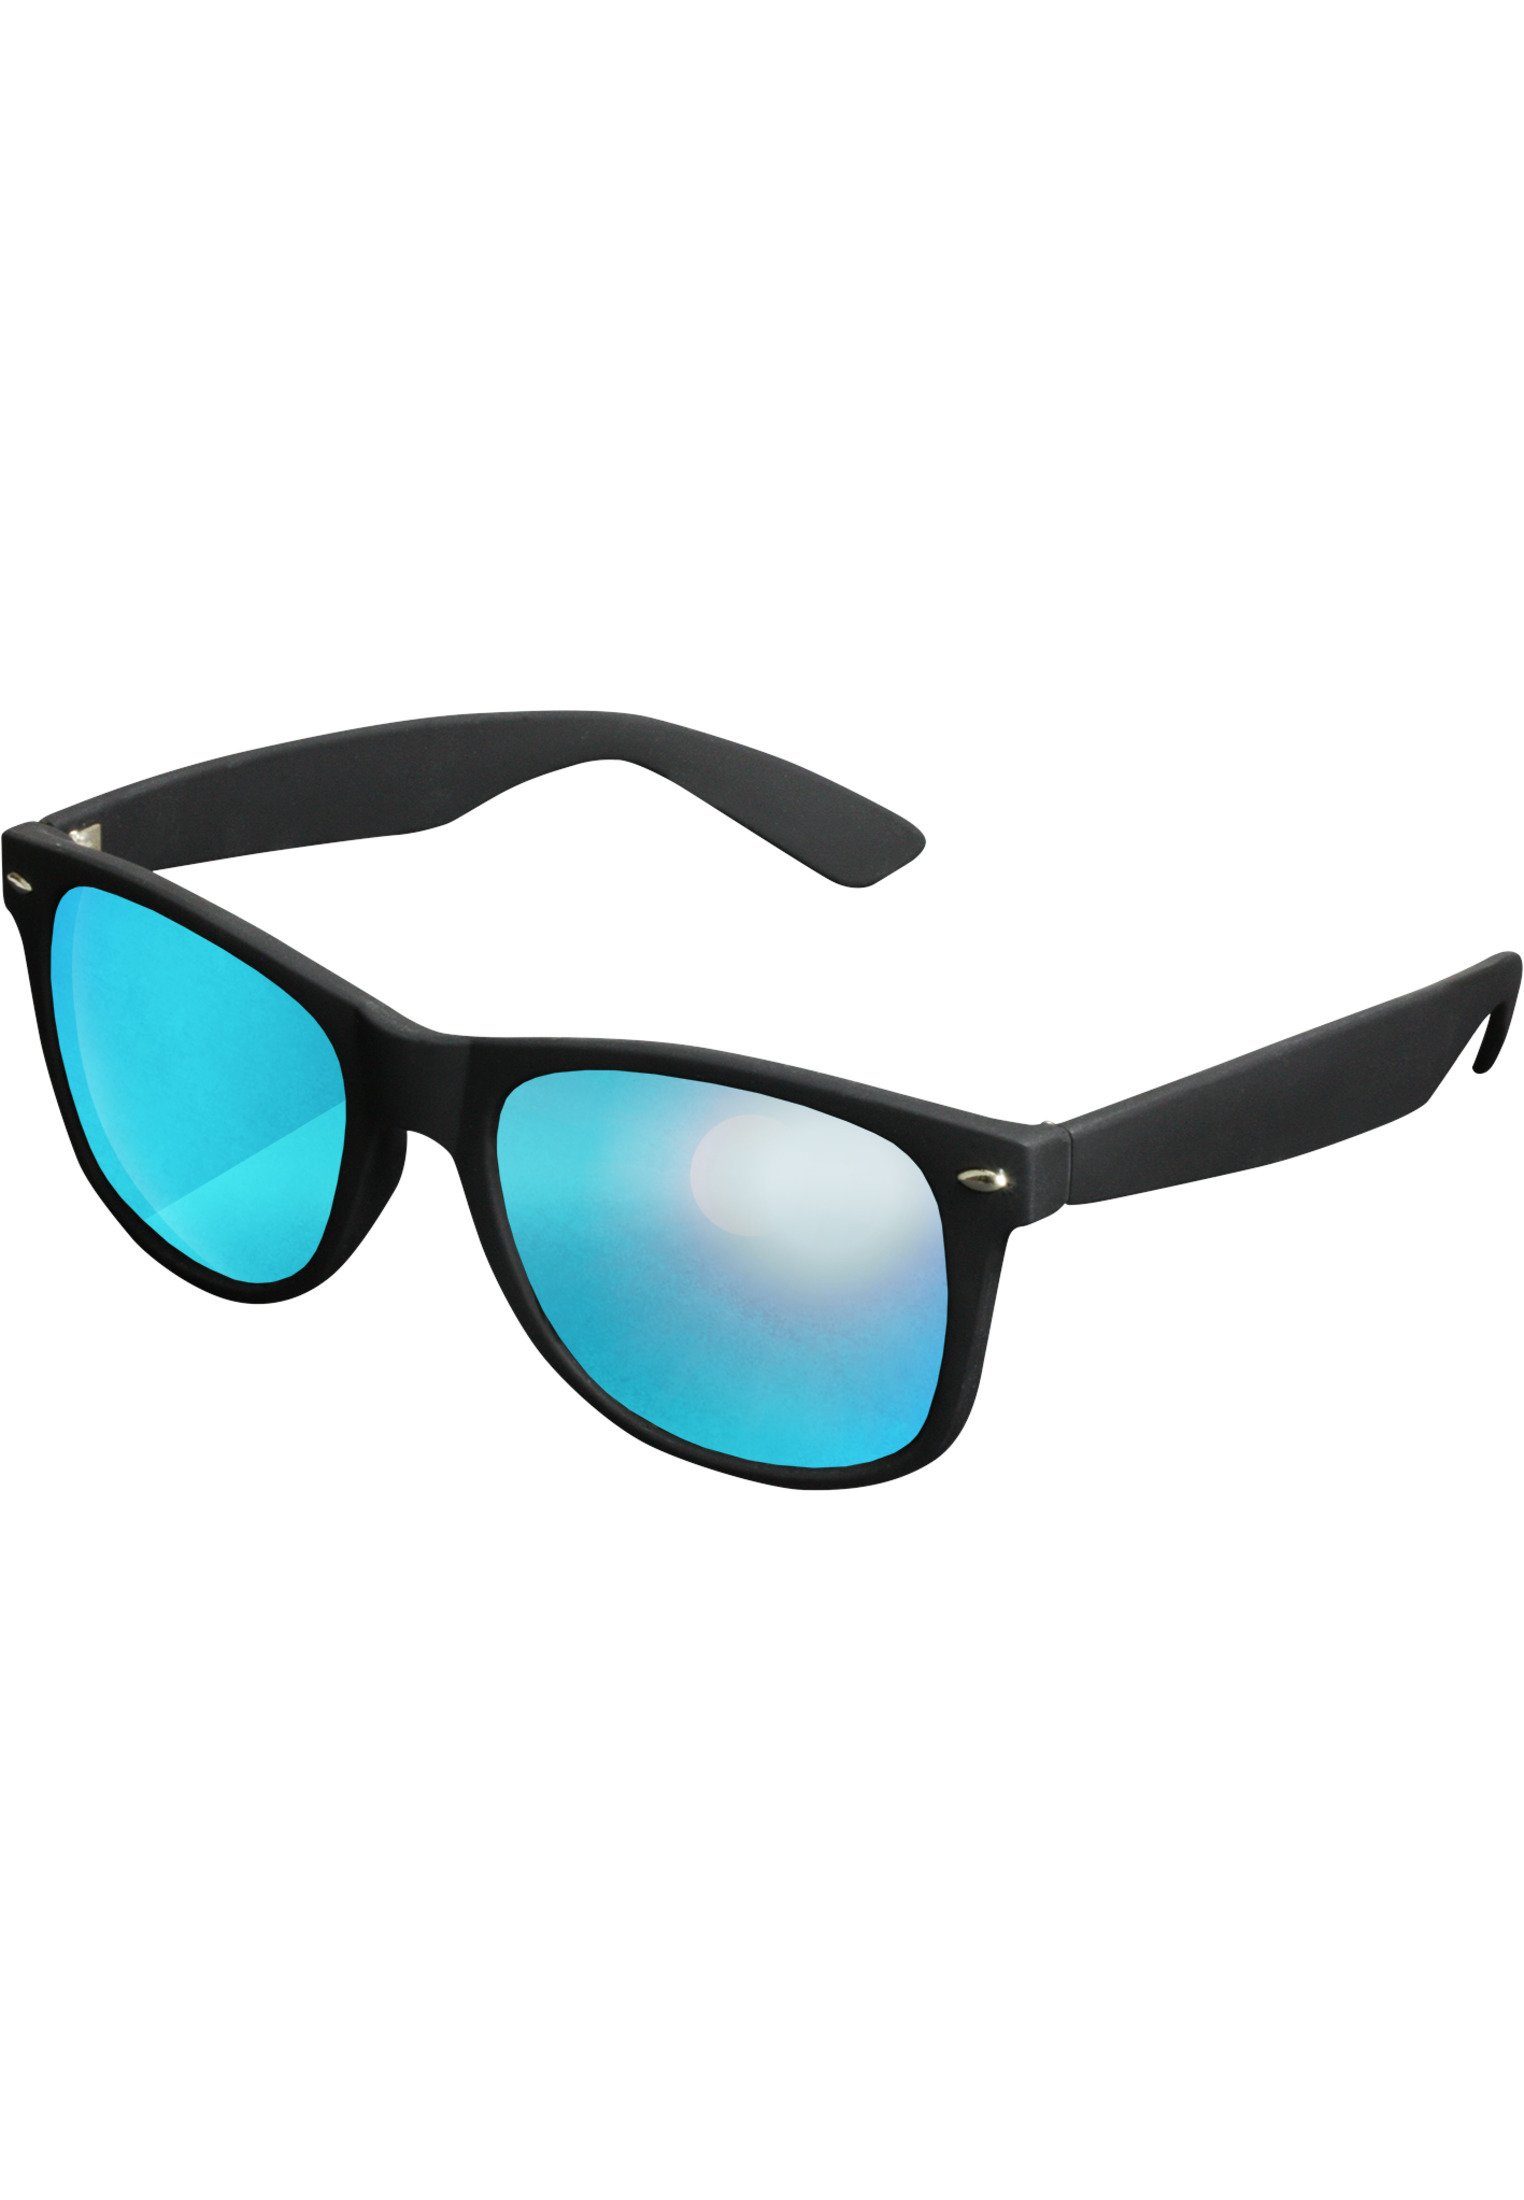 blk/blue Accessoires Likoma Sonnenbrille Mirror MSTRDS Sunglasses